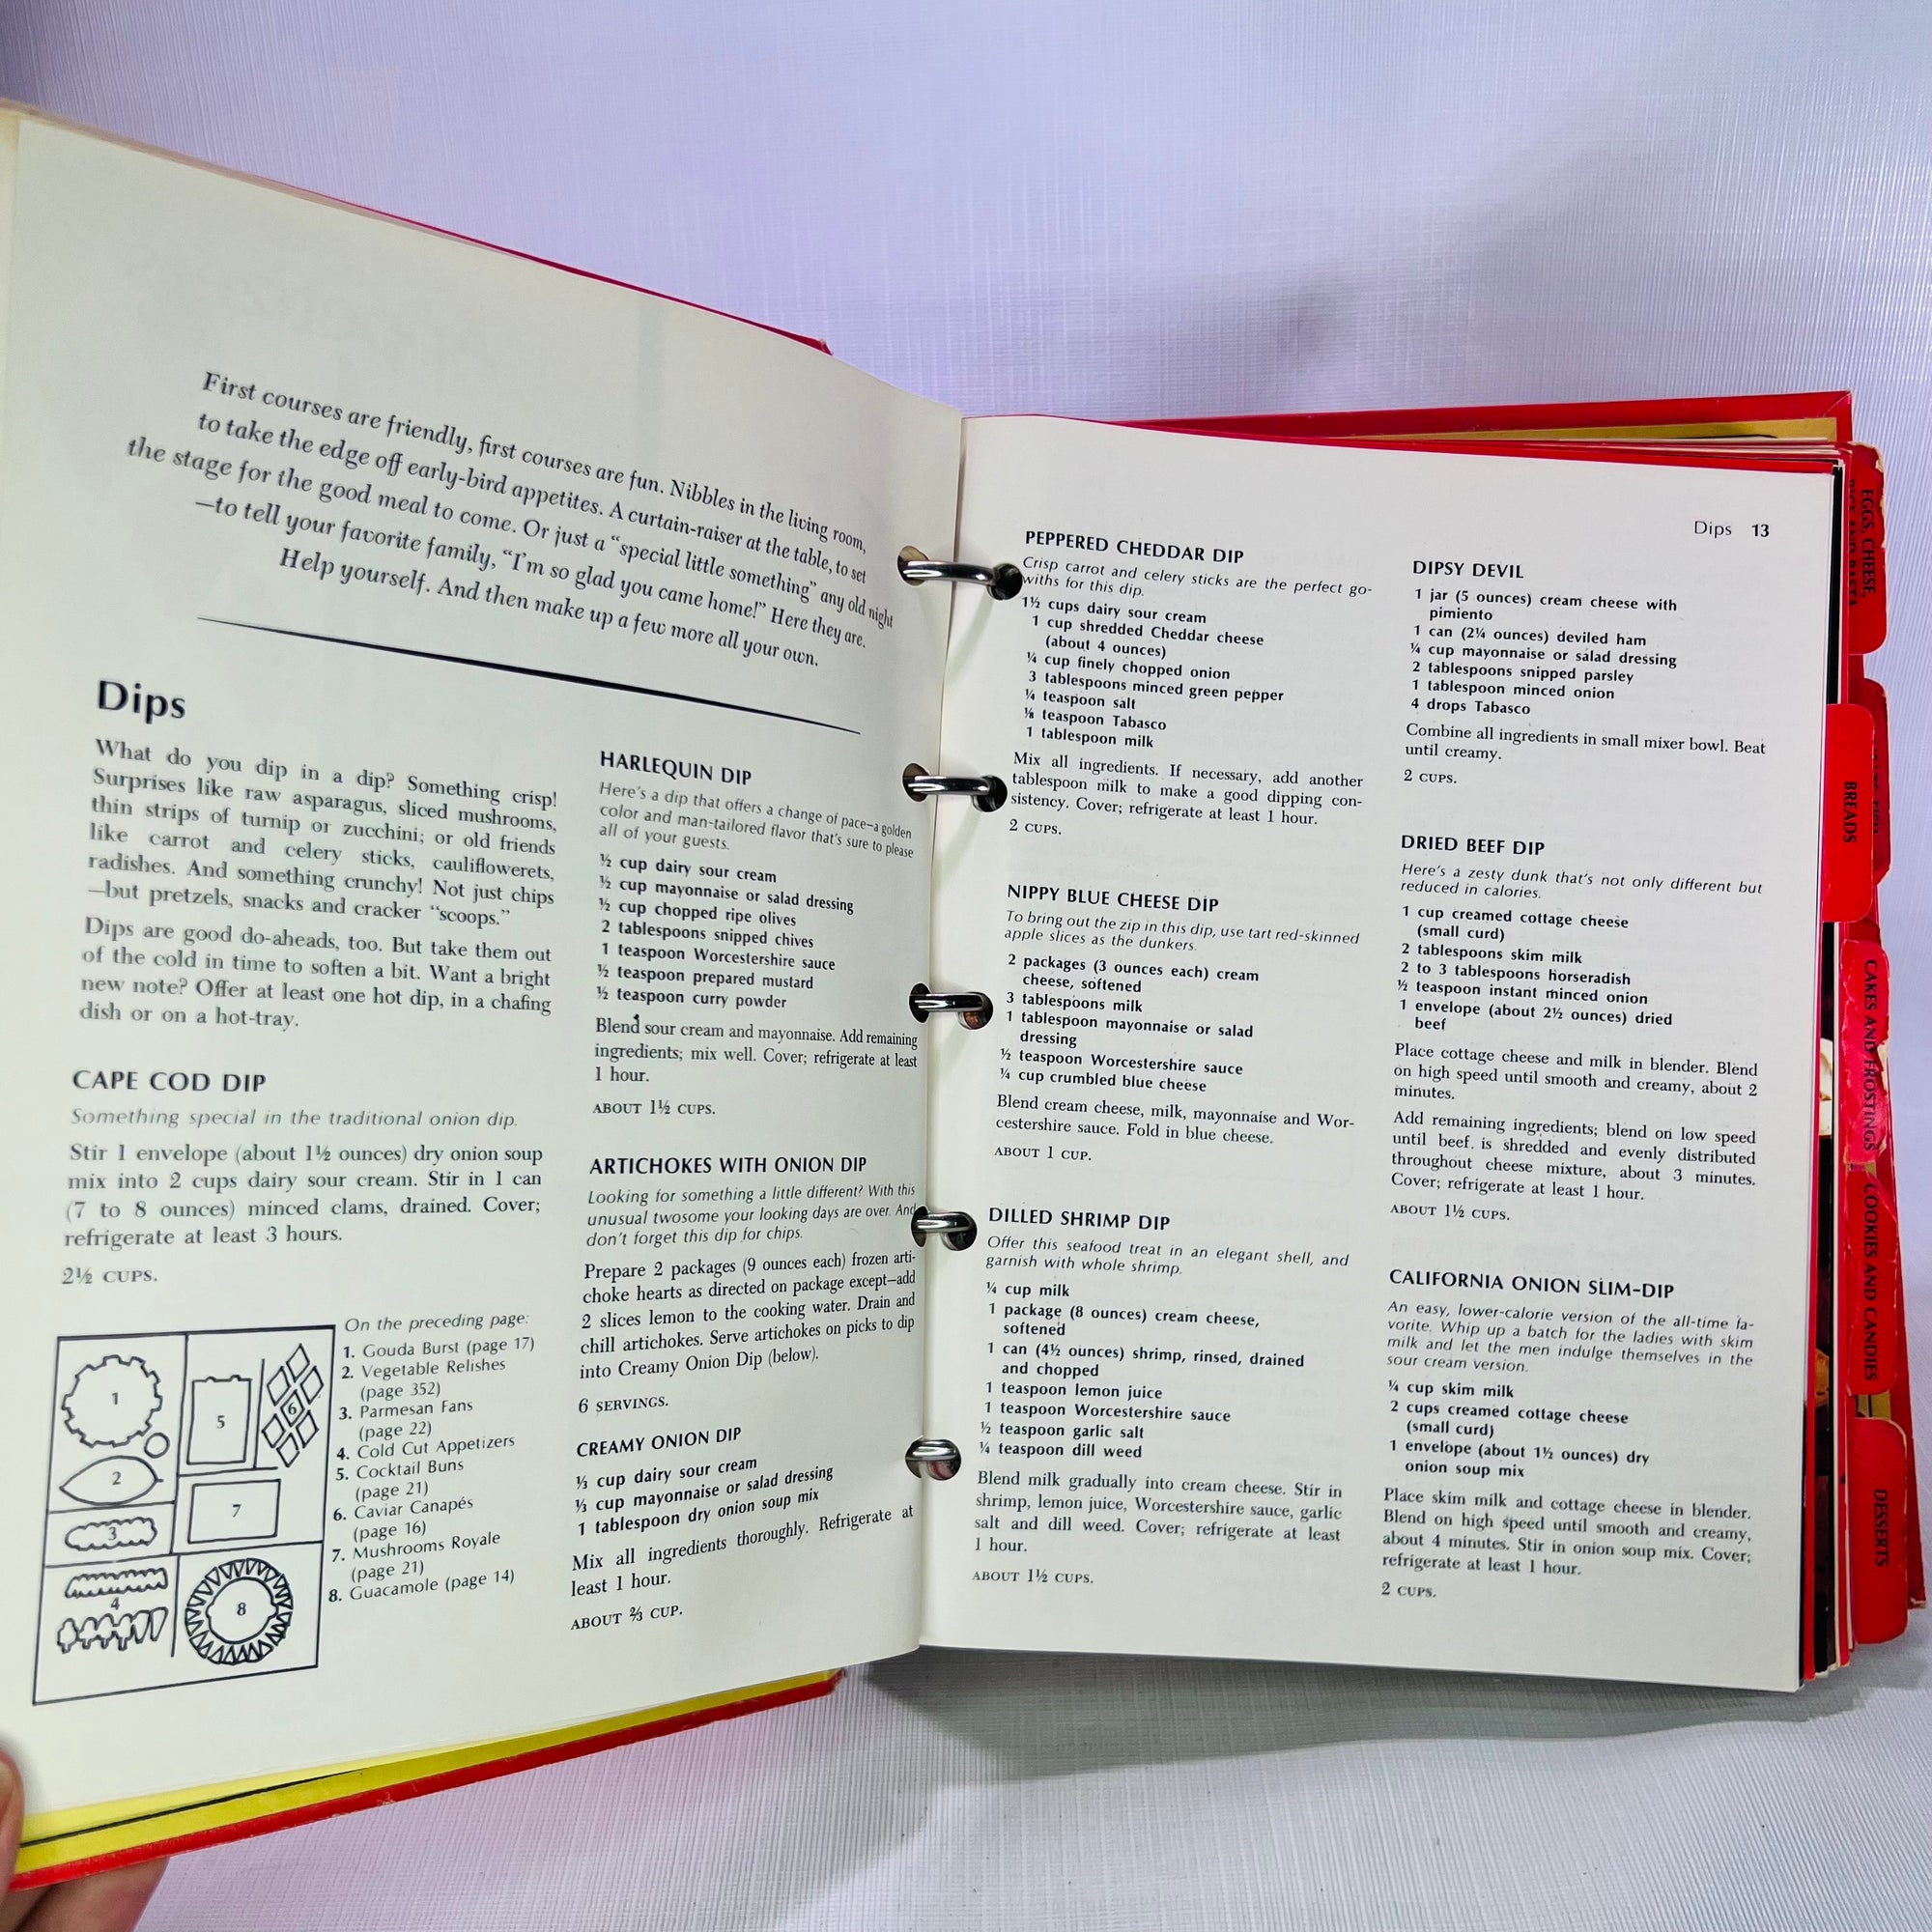 Betty Crocker's Cookbook Five Ring Binder by General Mills Inc. 1971 Western Publishing Company